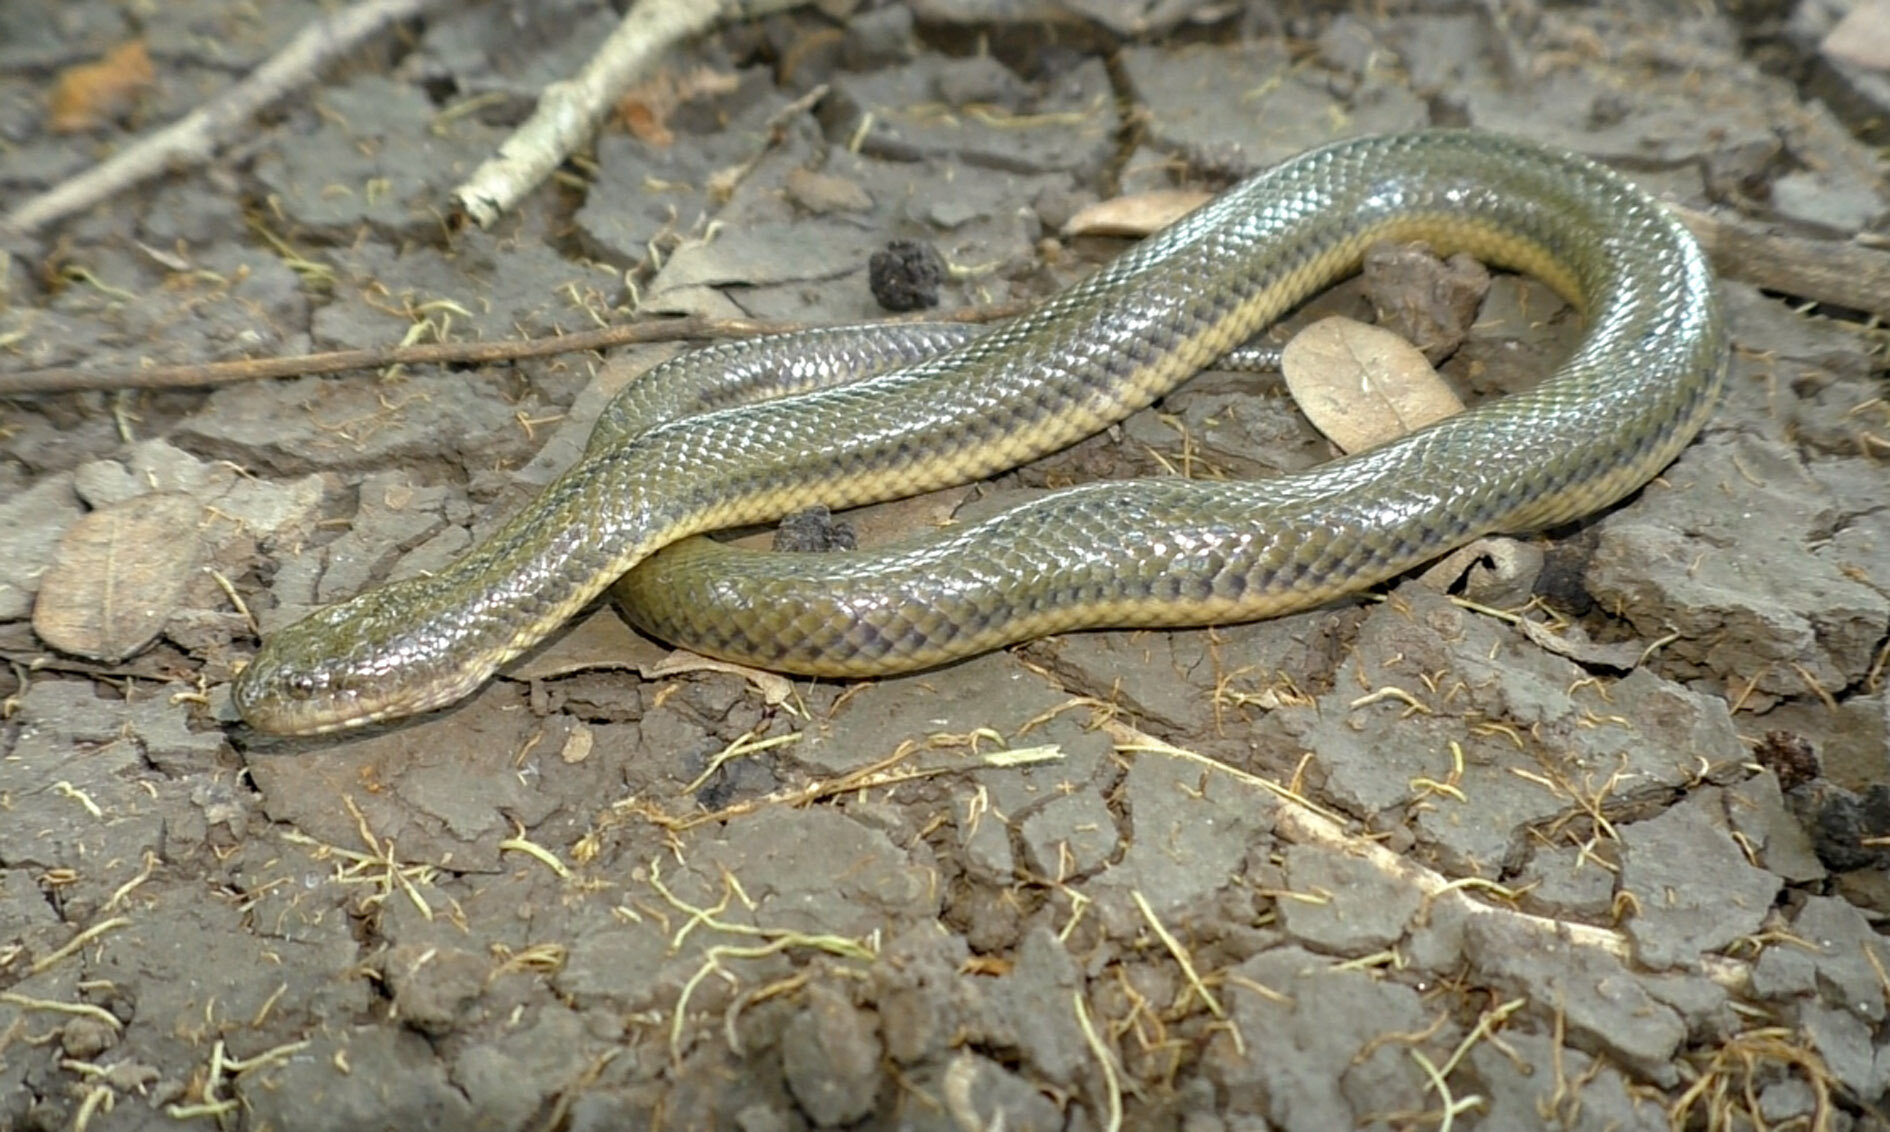 New snake species and genus discovered in Myanmar